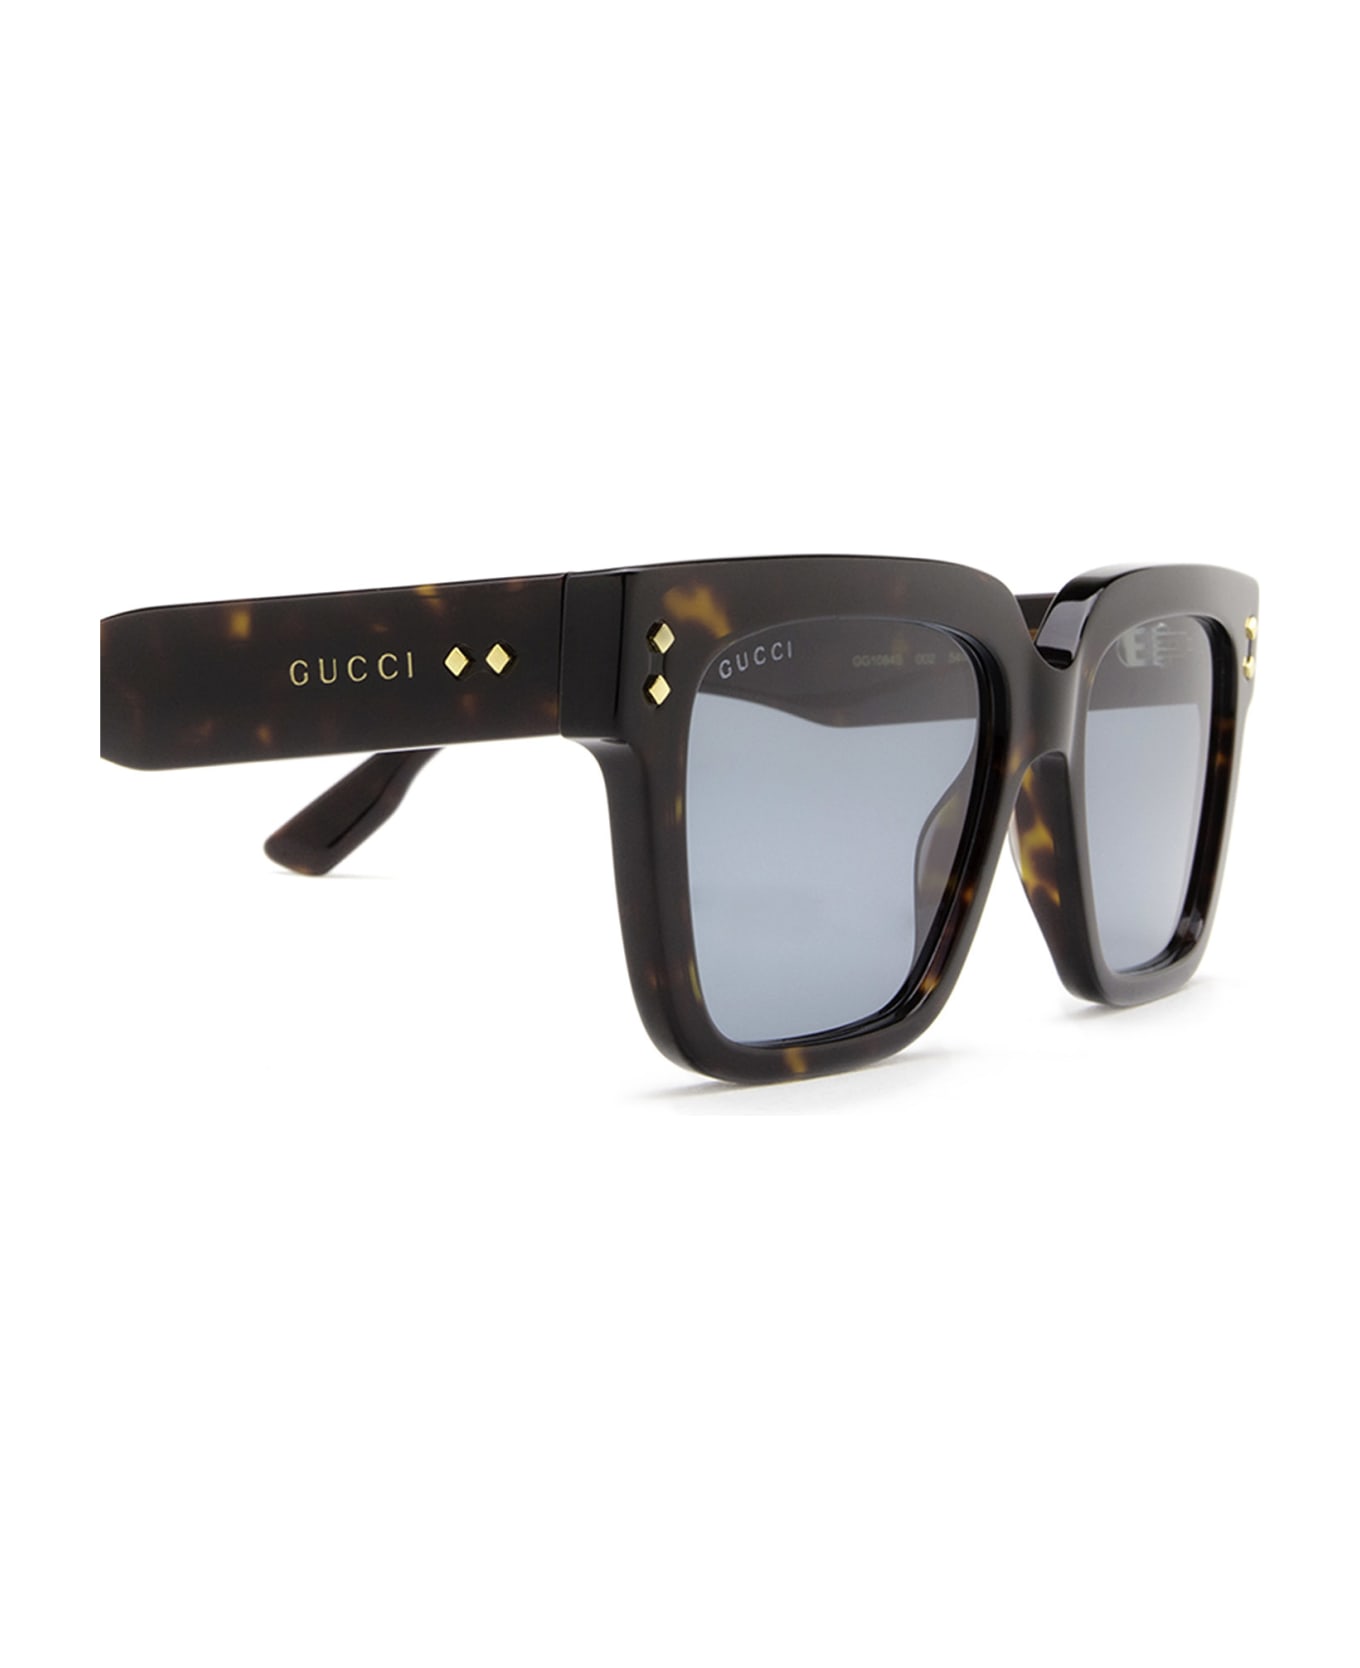 Gucci Eyewear Gg1084s Havana Sunglasses - Havana